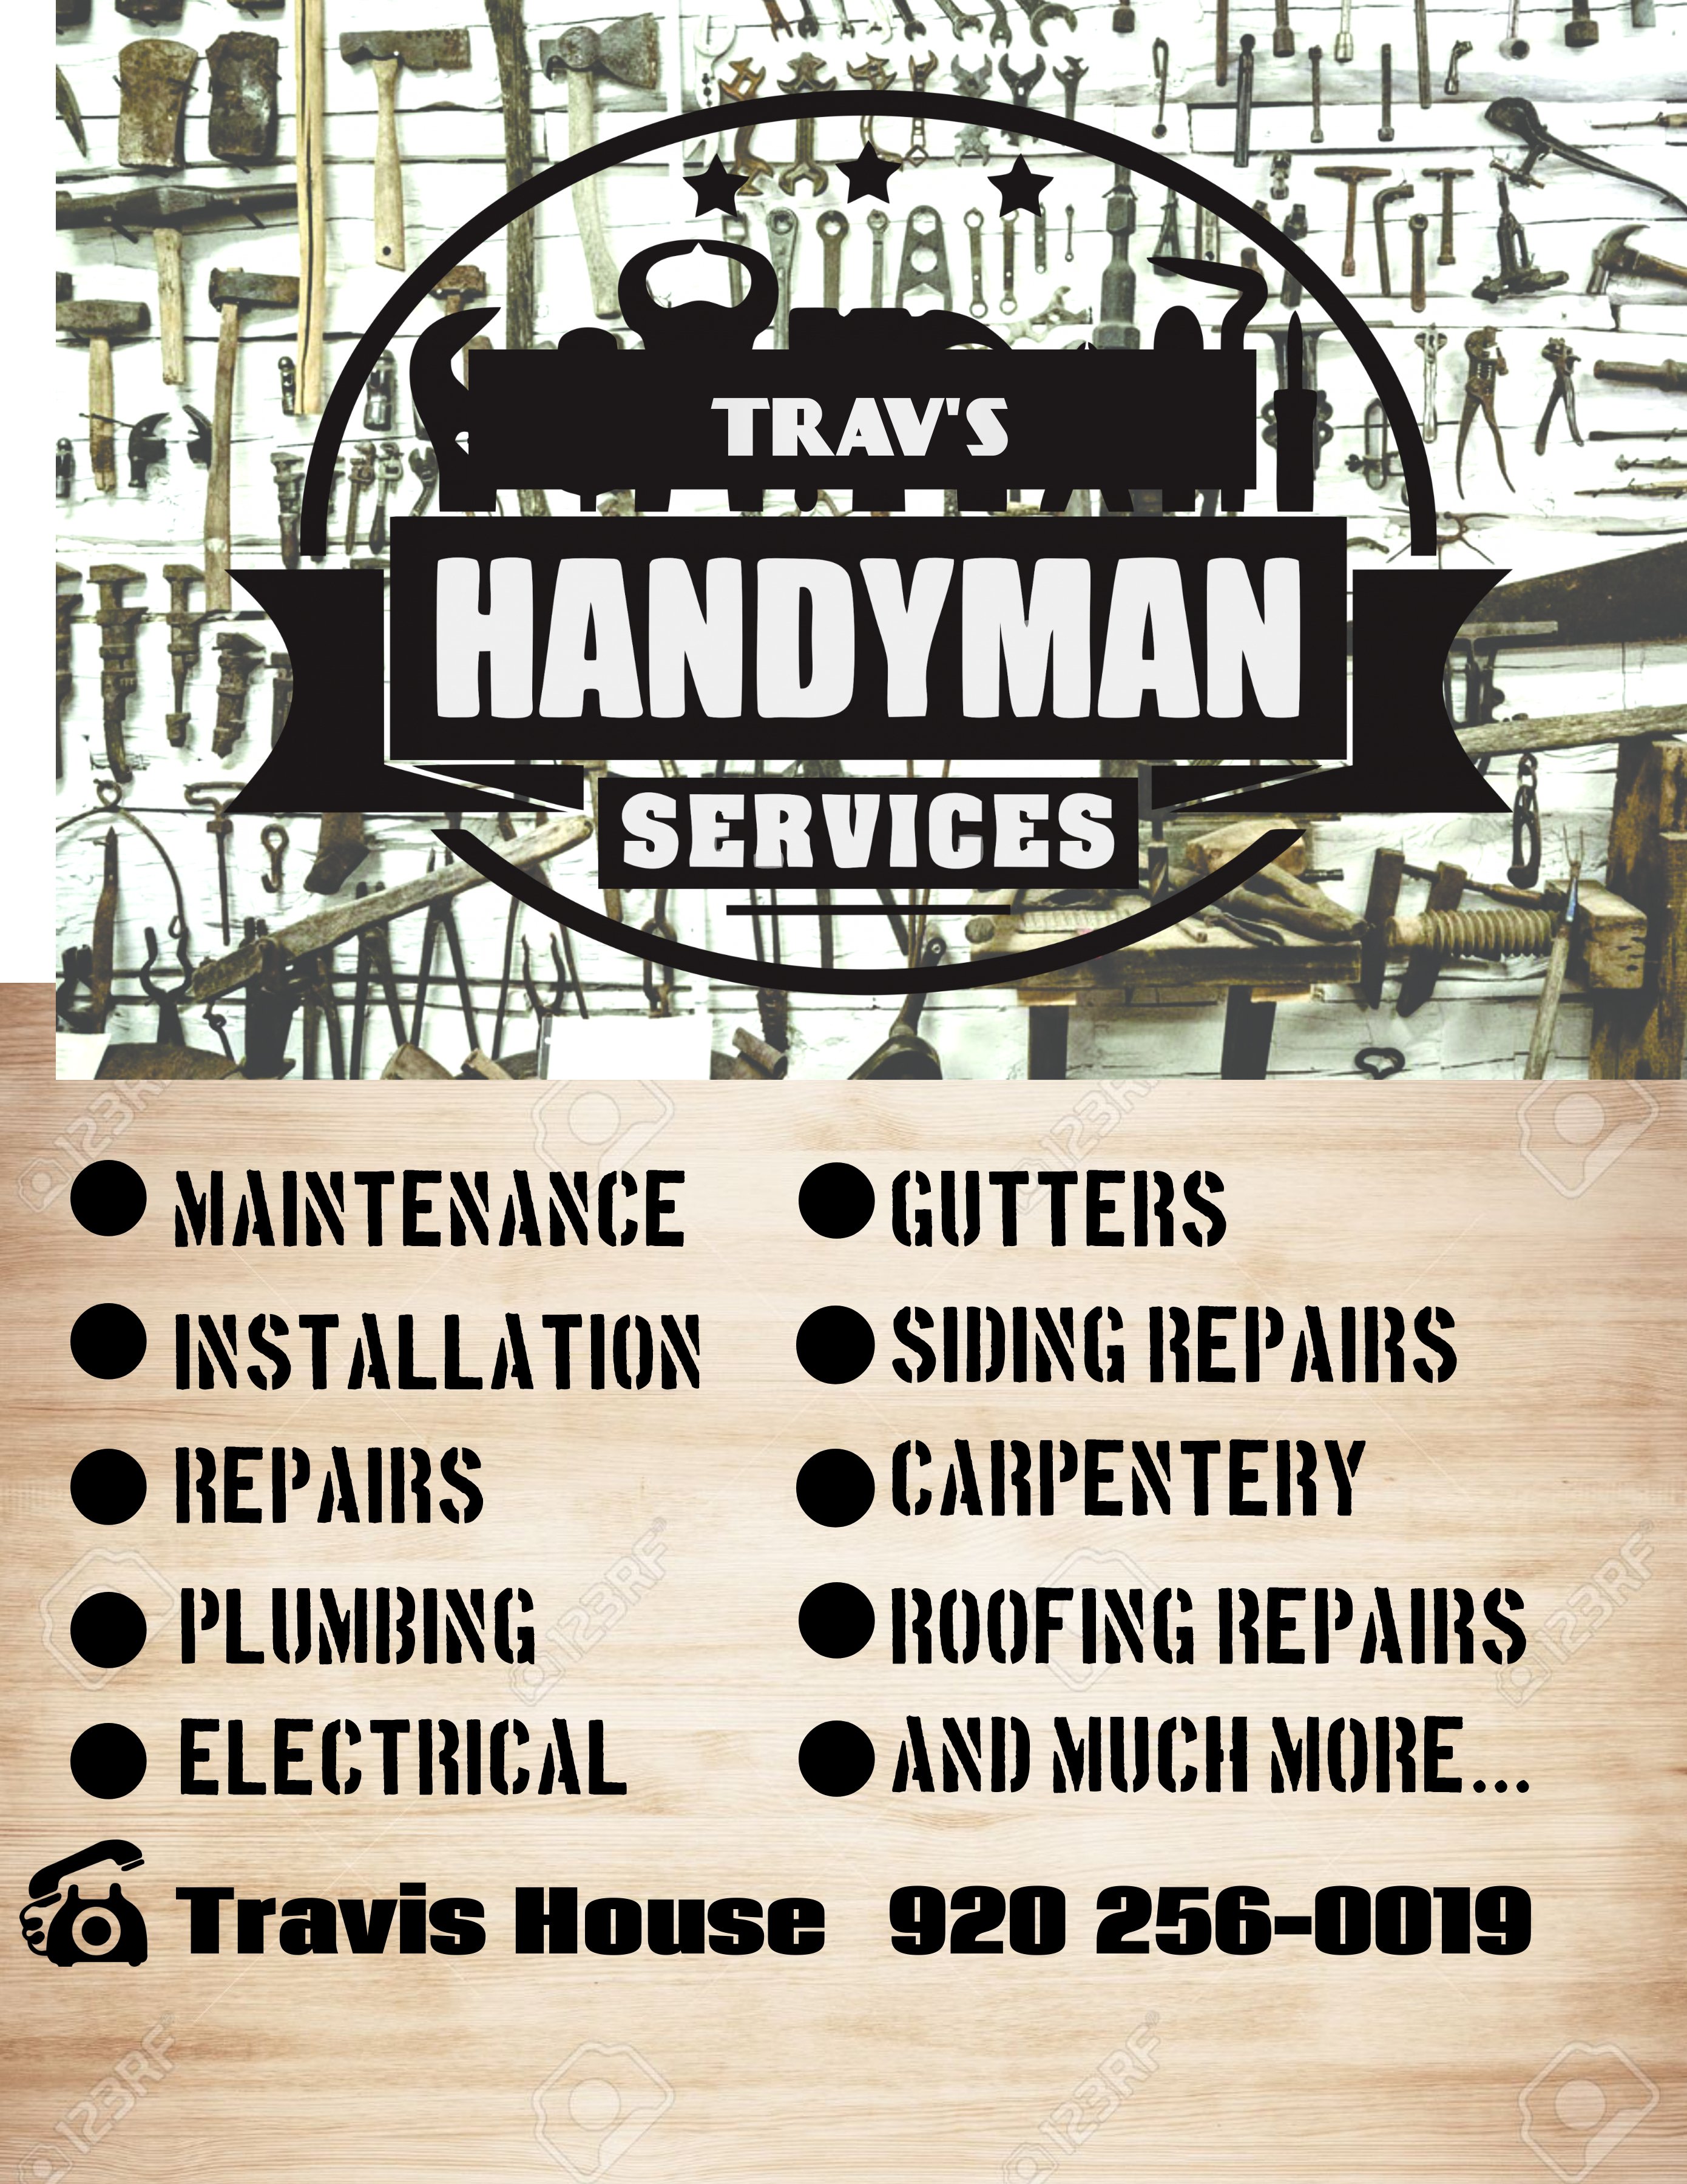 Trav's Handyman Service Logo